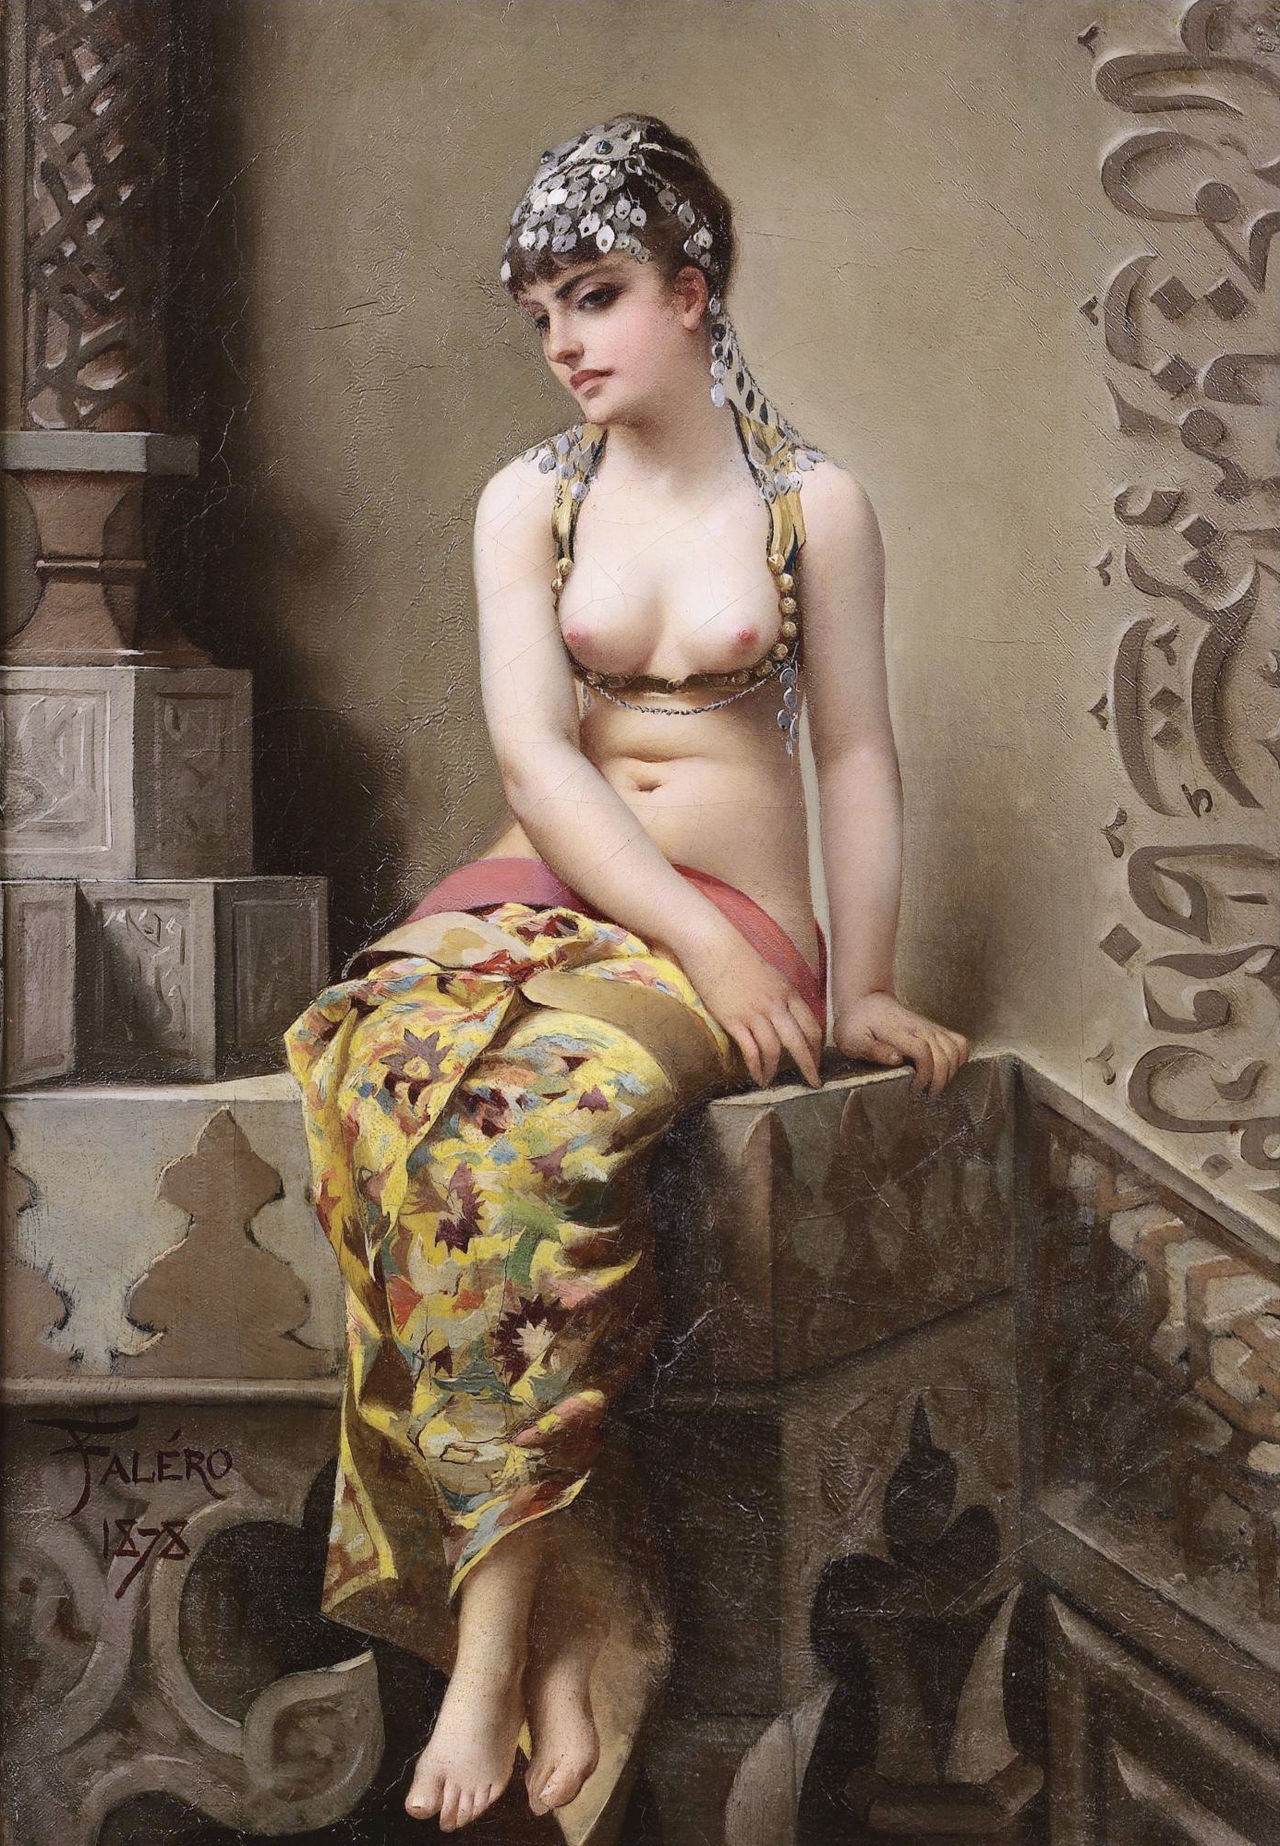 Erotic Art Collector 0319 LUIS RICARDO FALERO 1851-1896 16